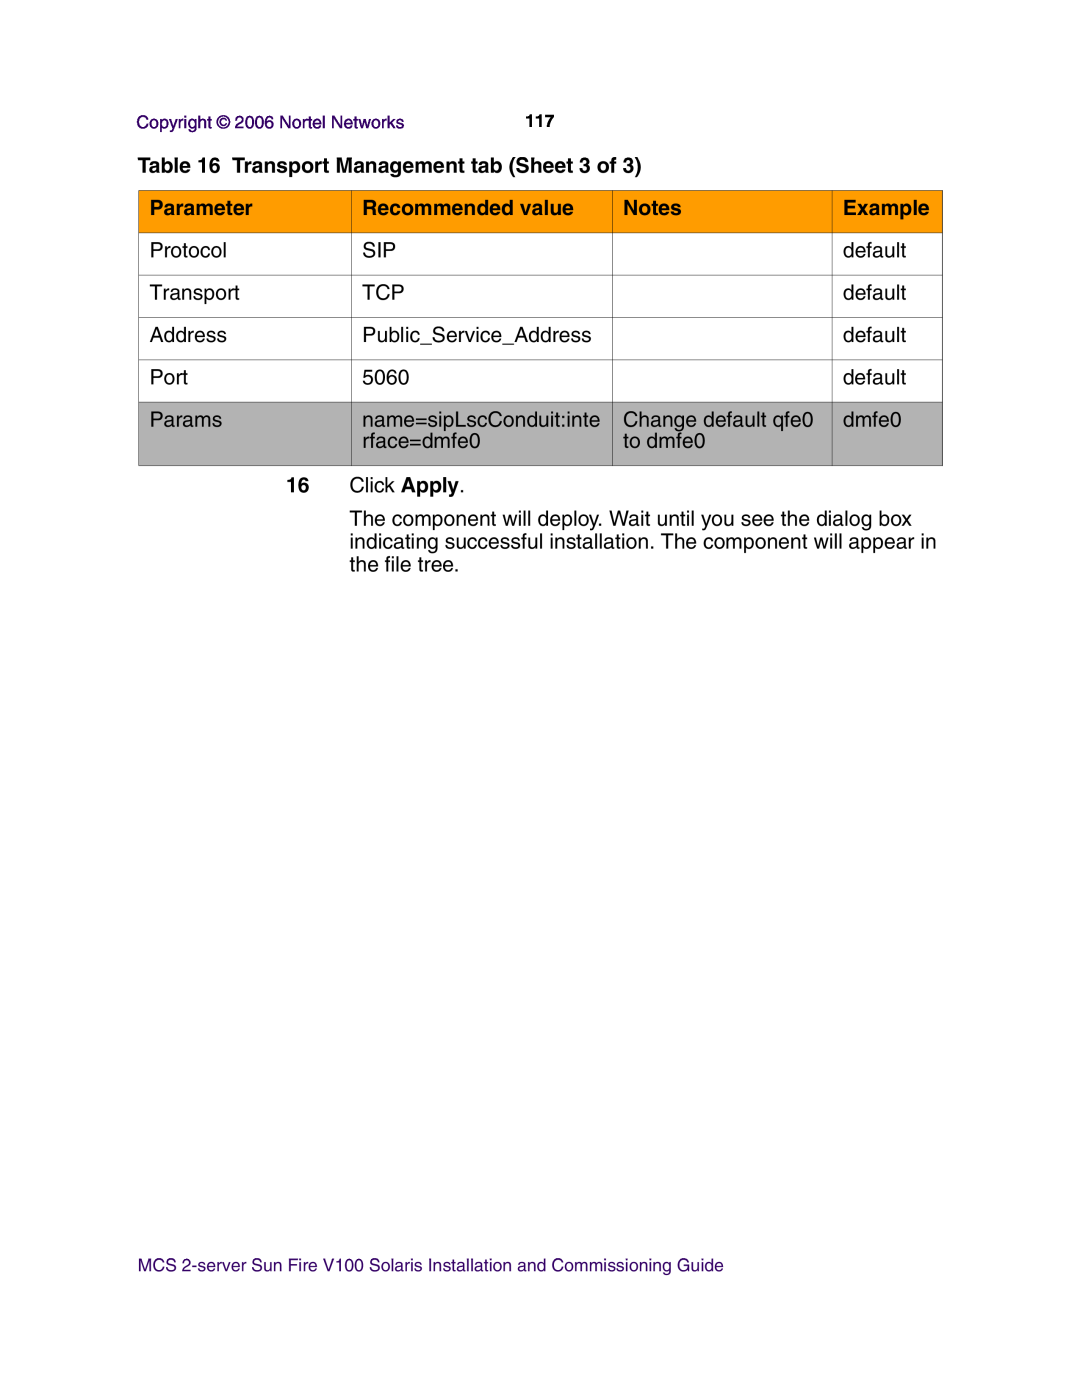 Nortel Networks V100 manual Transport Management tab Sheet 3 of, Parameter, Recommended value, Example 